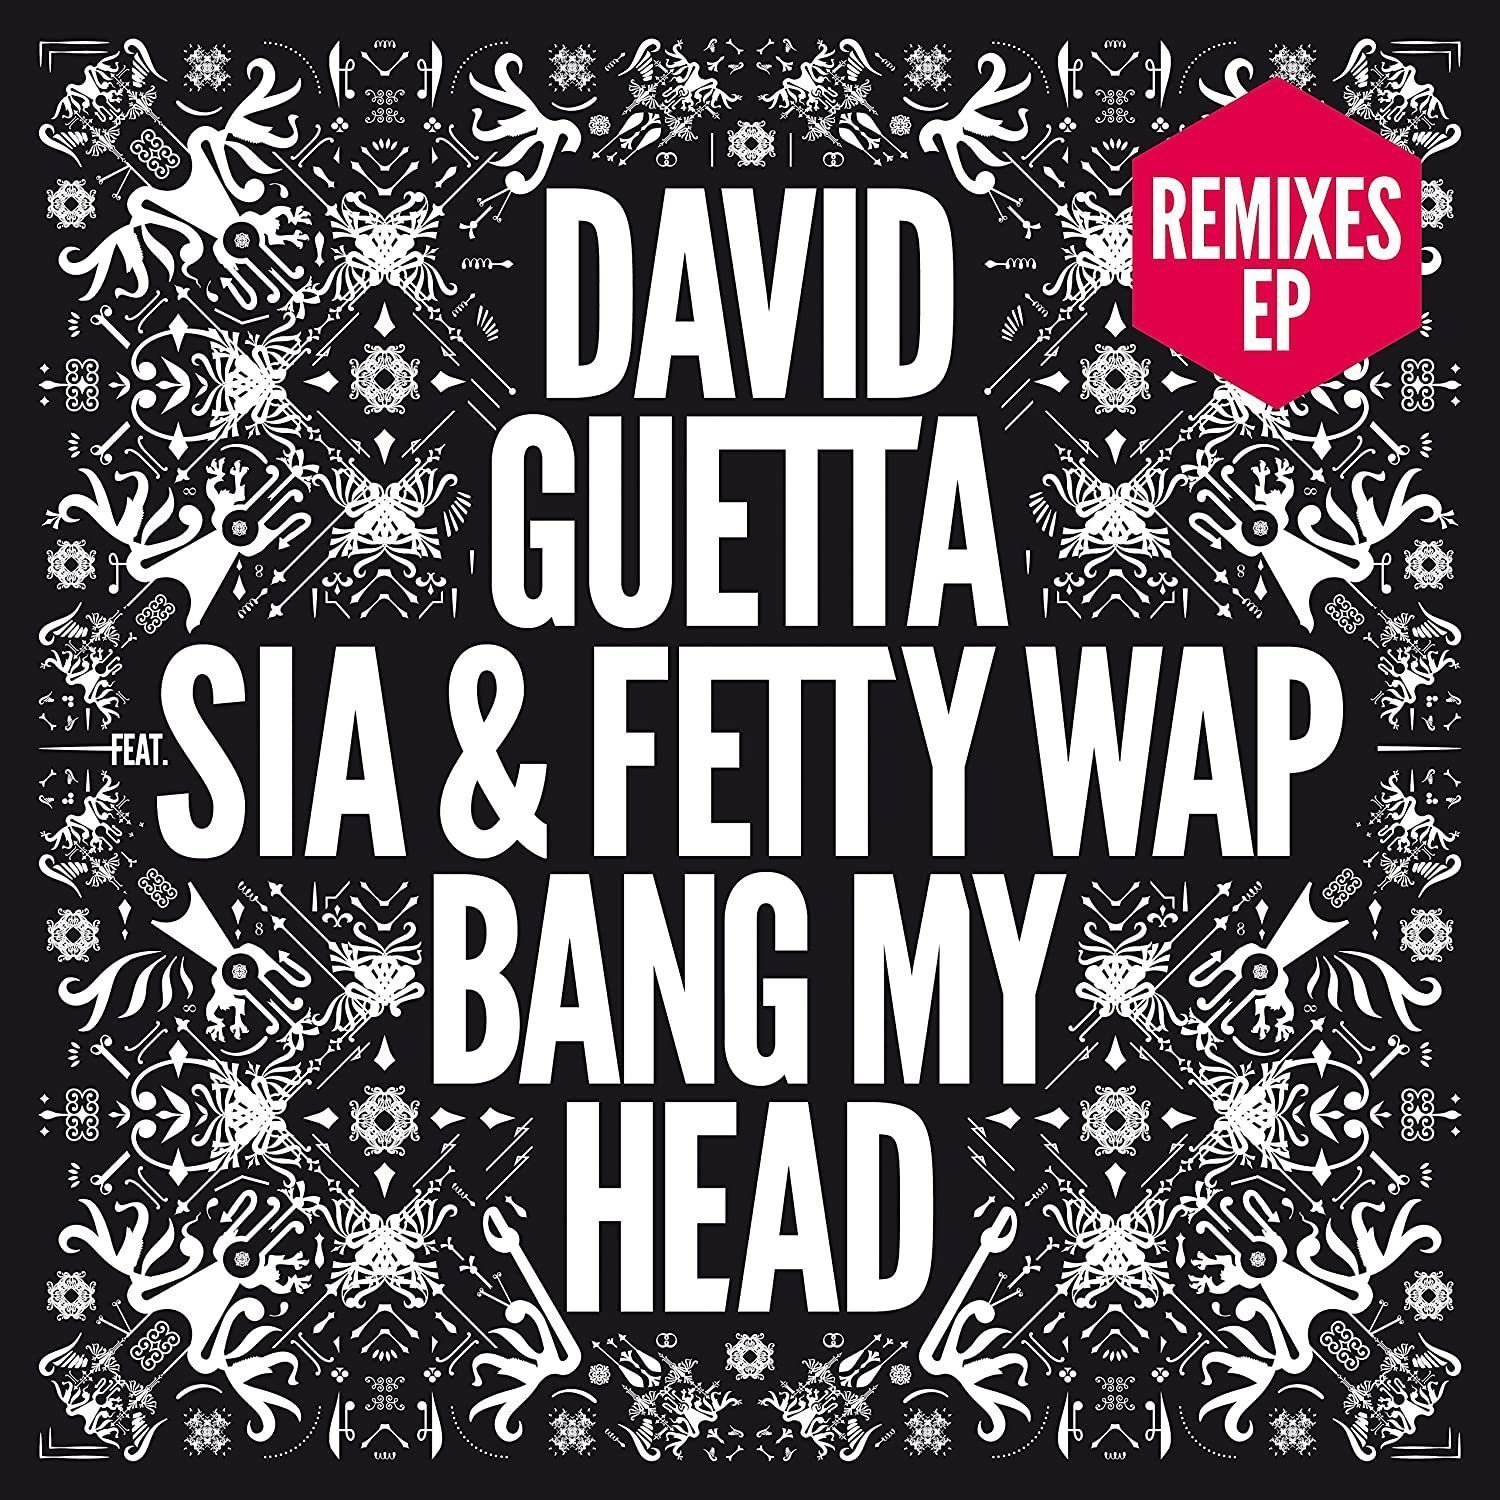 Vinylplade David Guetta - Bang My Head (Feat. Sia & Fetty Wap) (LP)